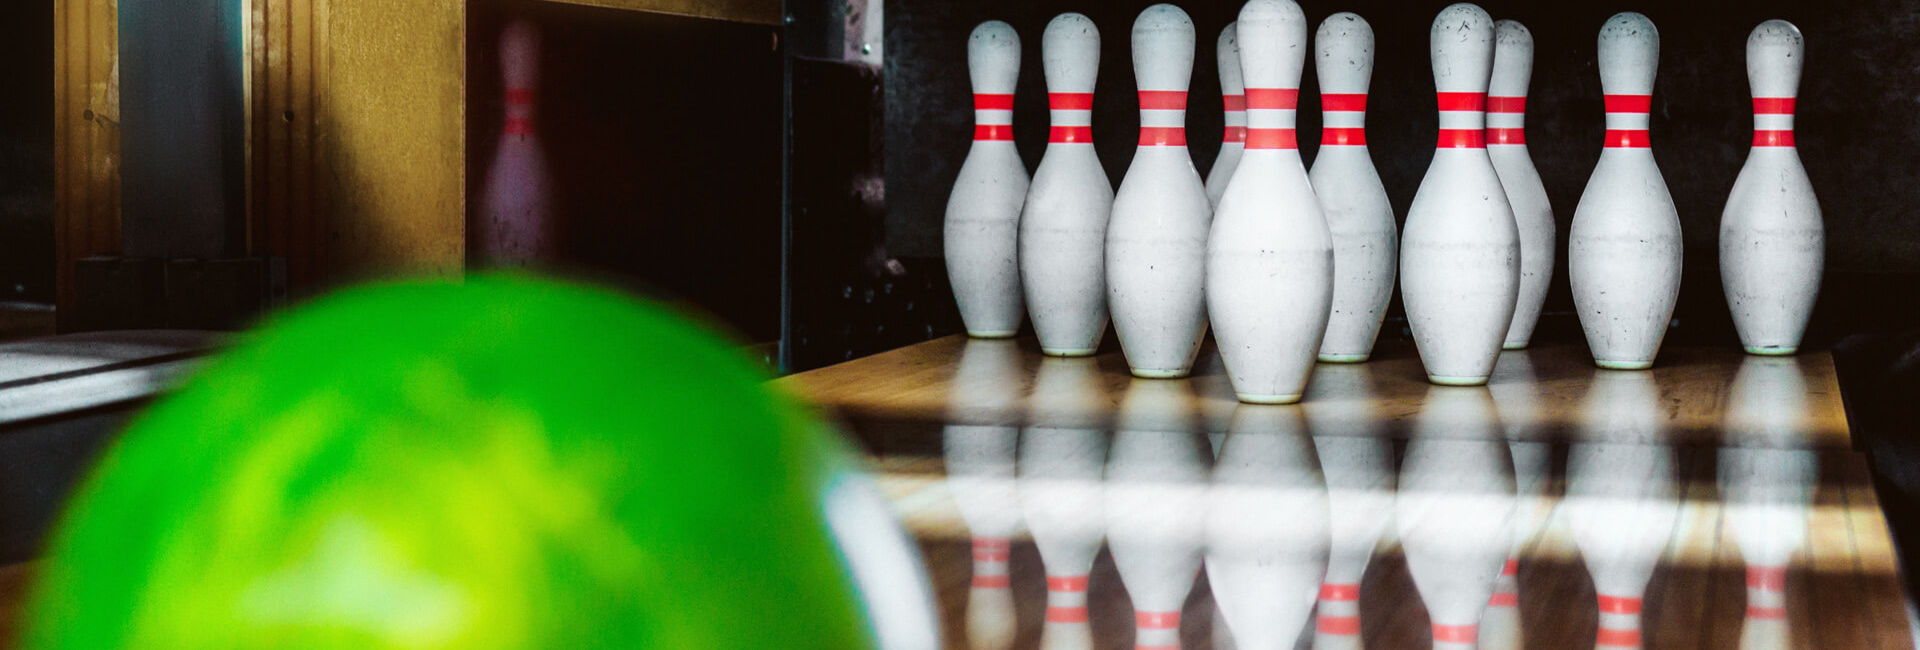 Groene bowlingbal en bowlingpins